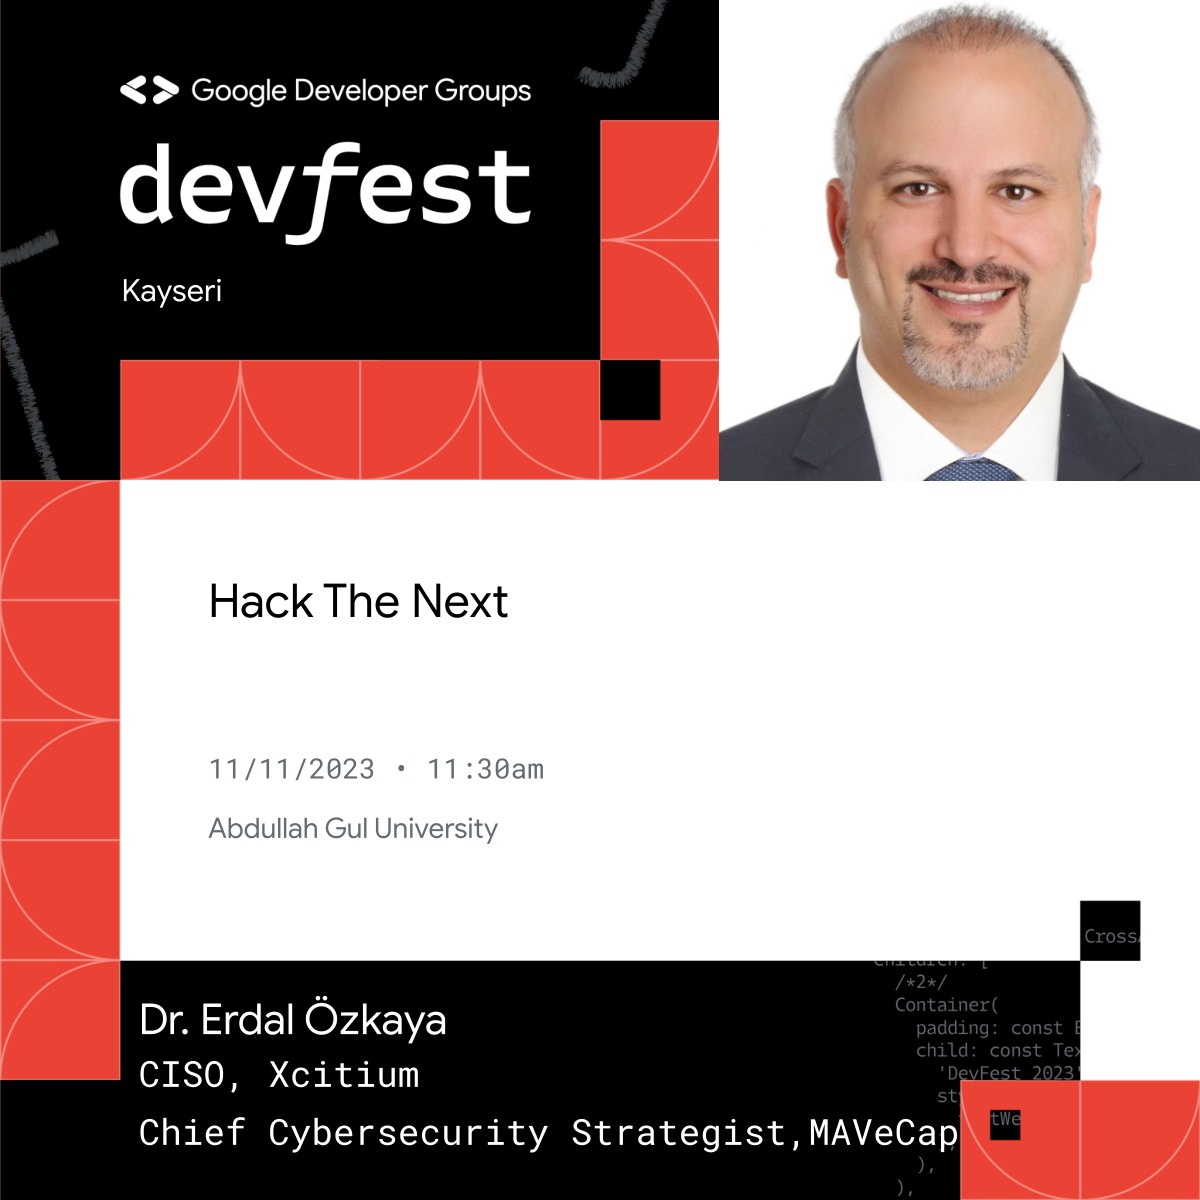 Google DevFest